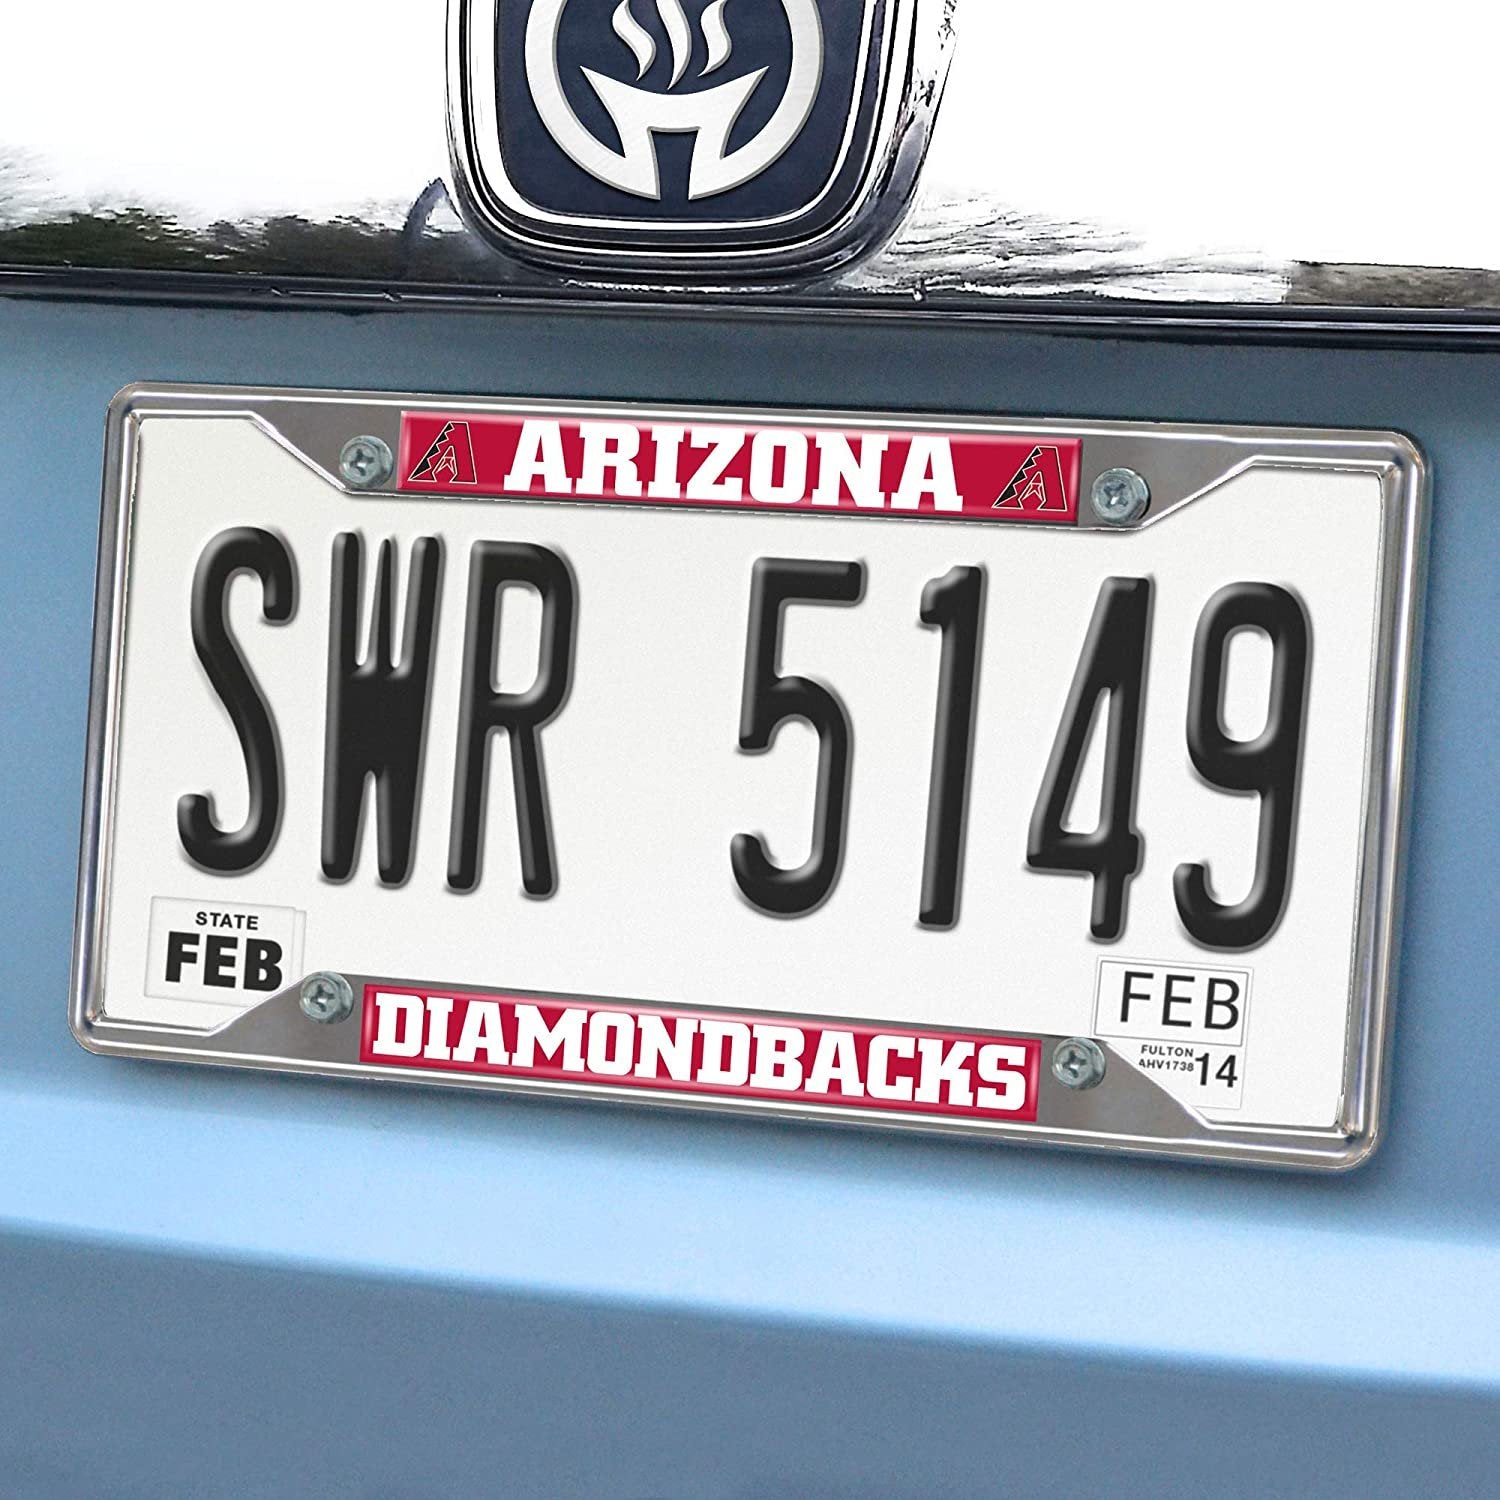 Arizona Diamondbacks Metal License Plate Frame Tag Cover Chrome 6x12 Inch